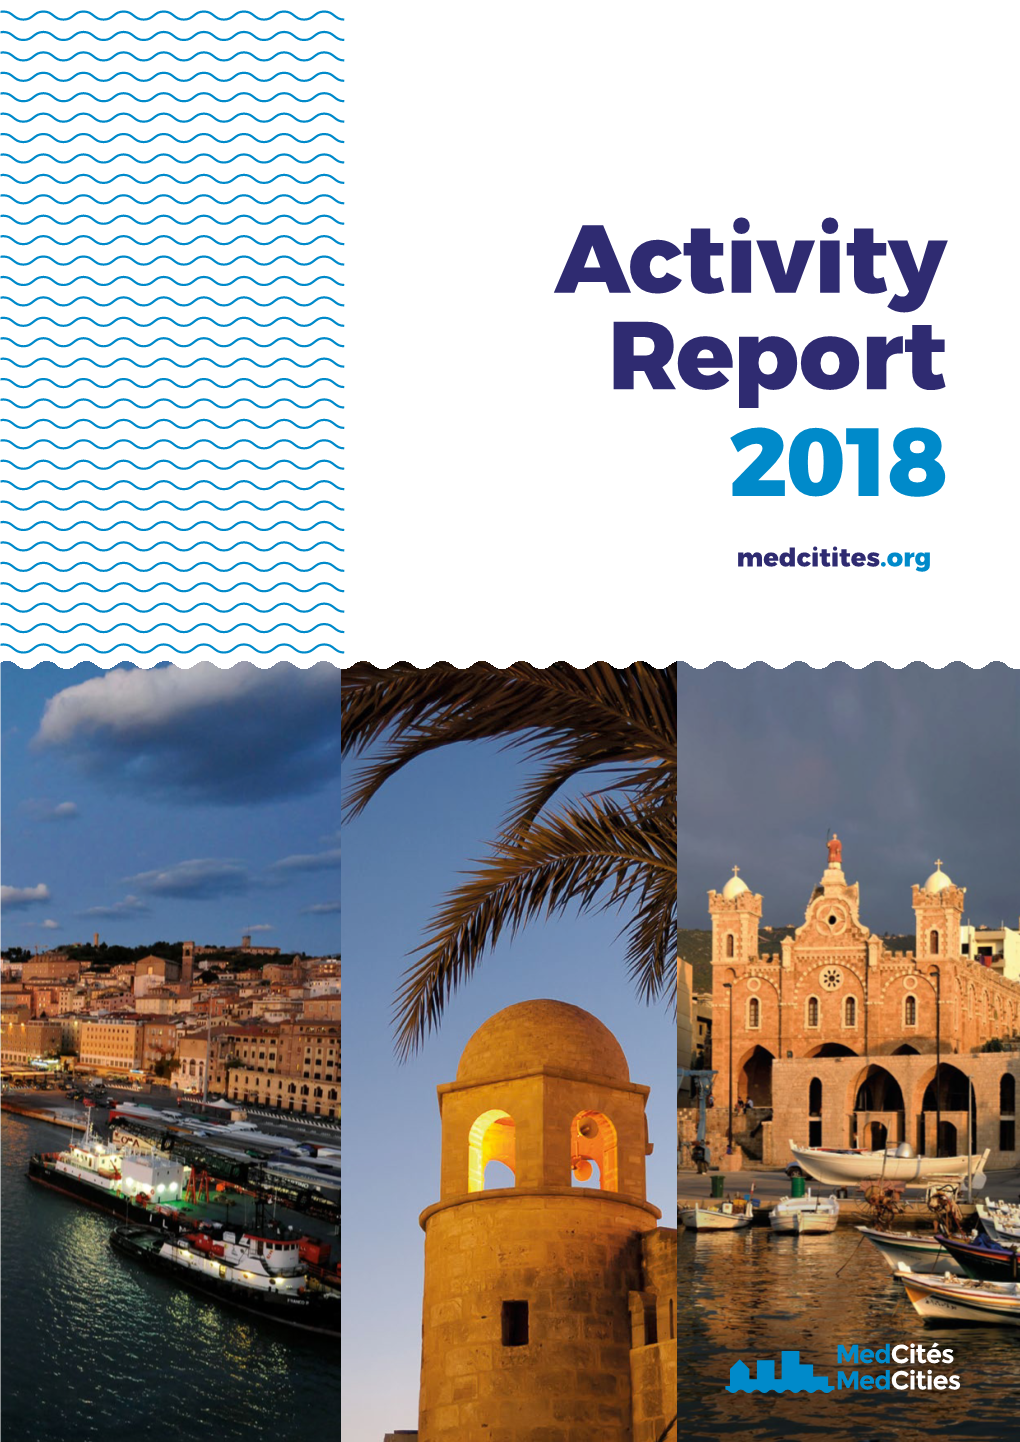 Activity Report 2018 Medcitites.Org